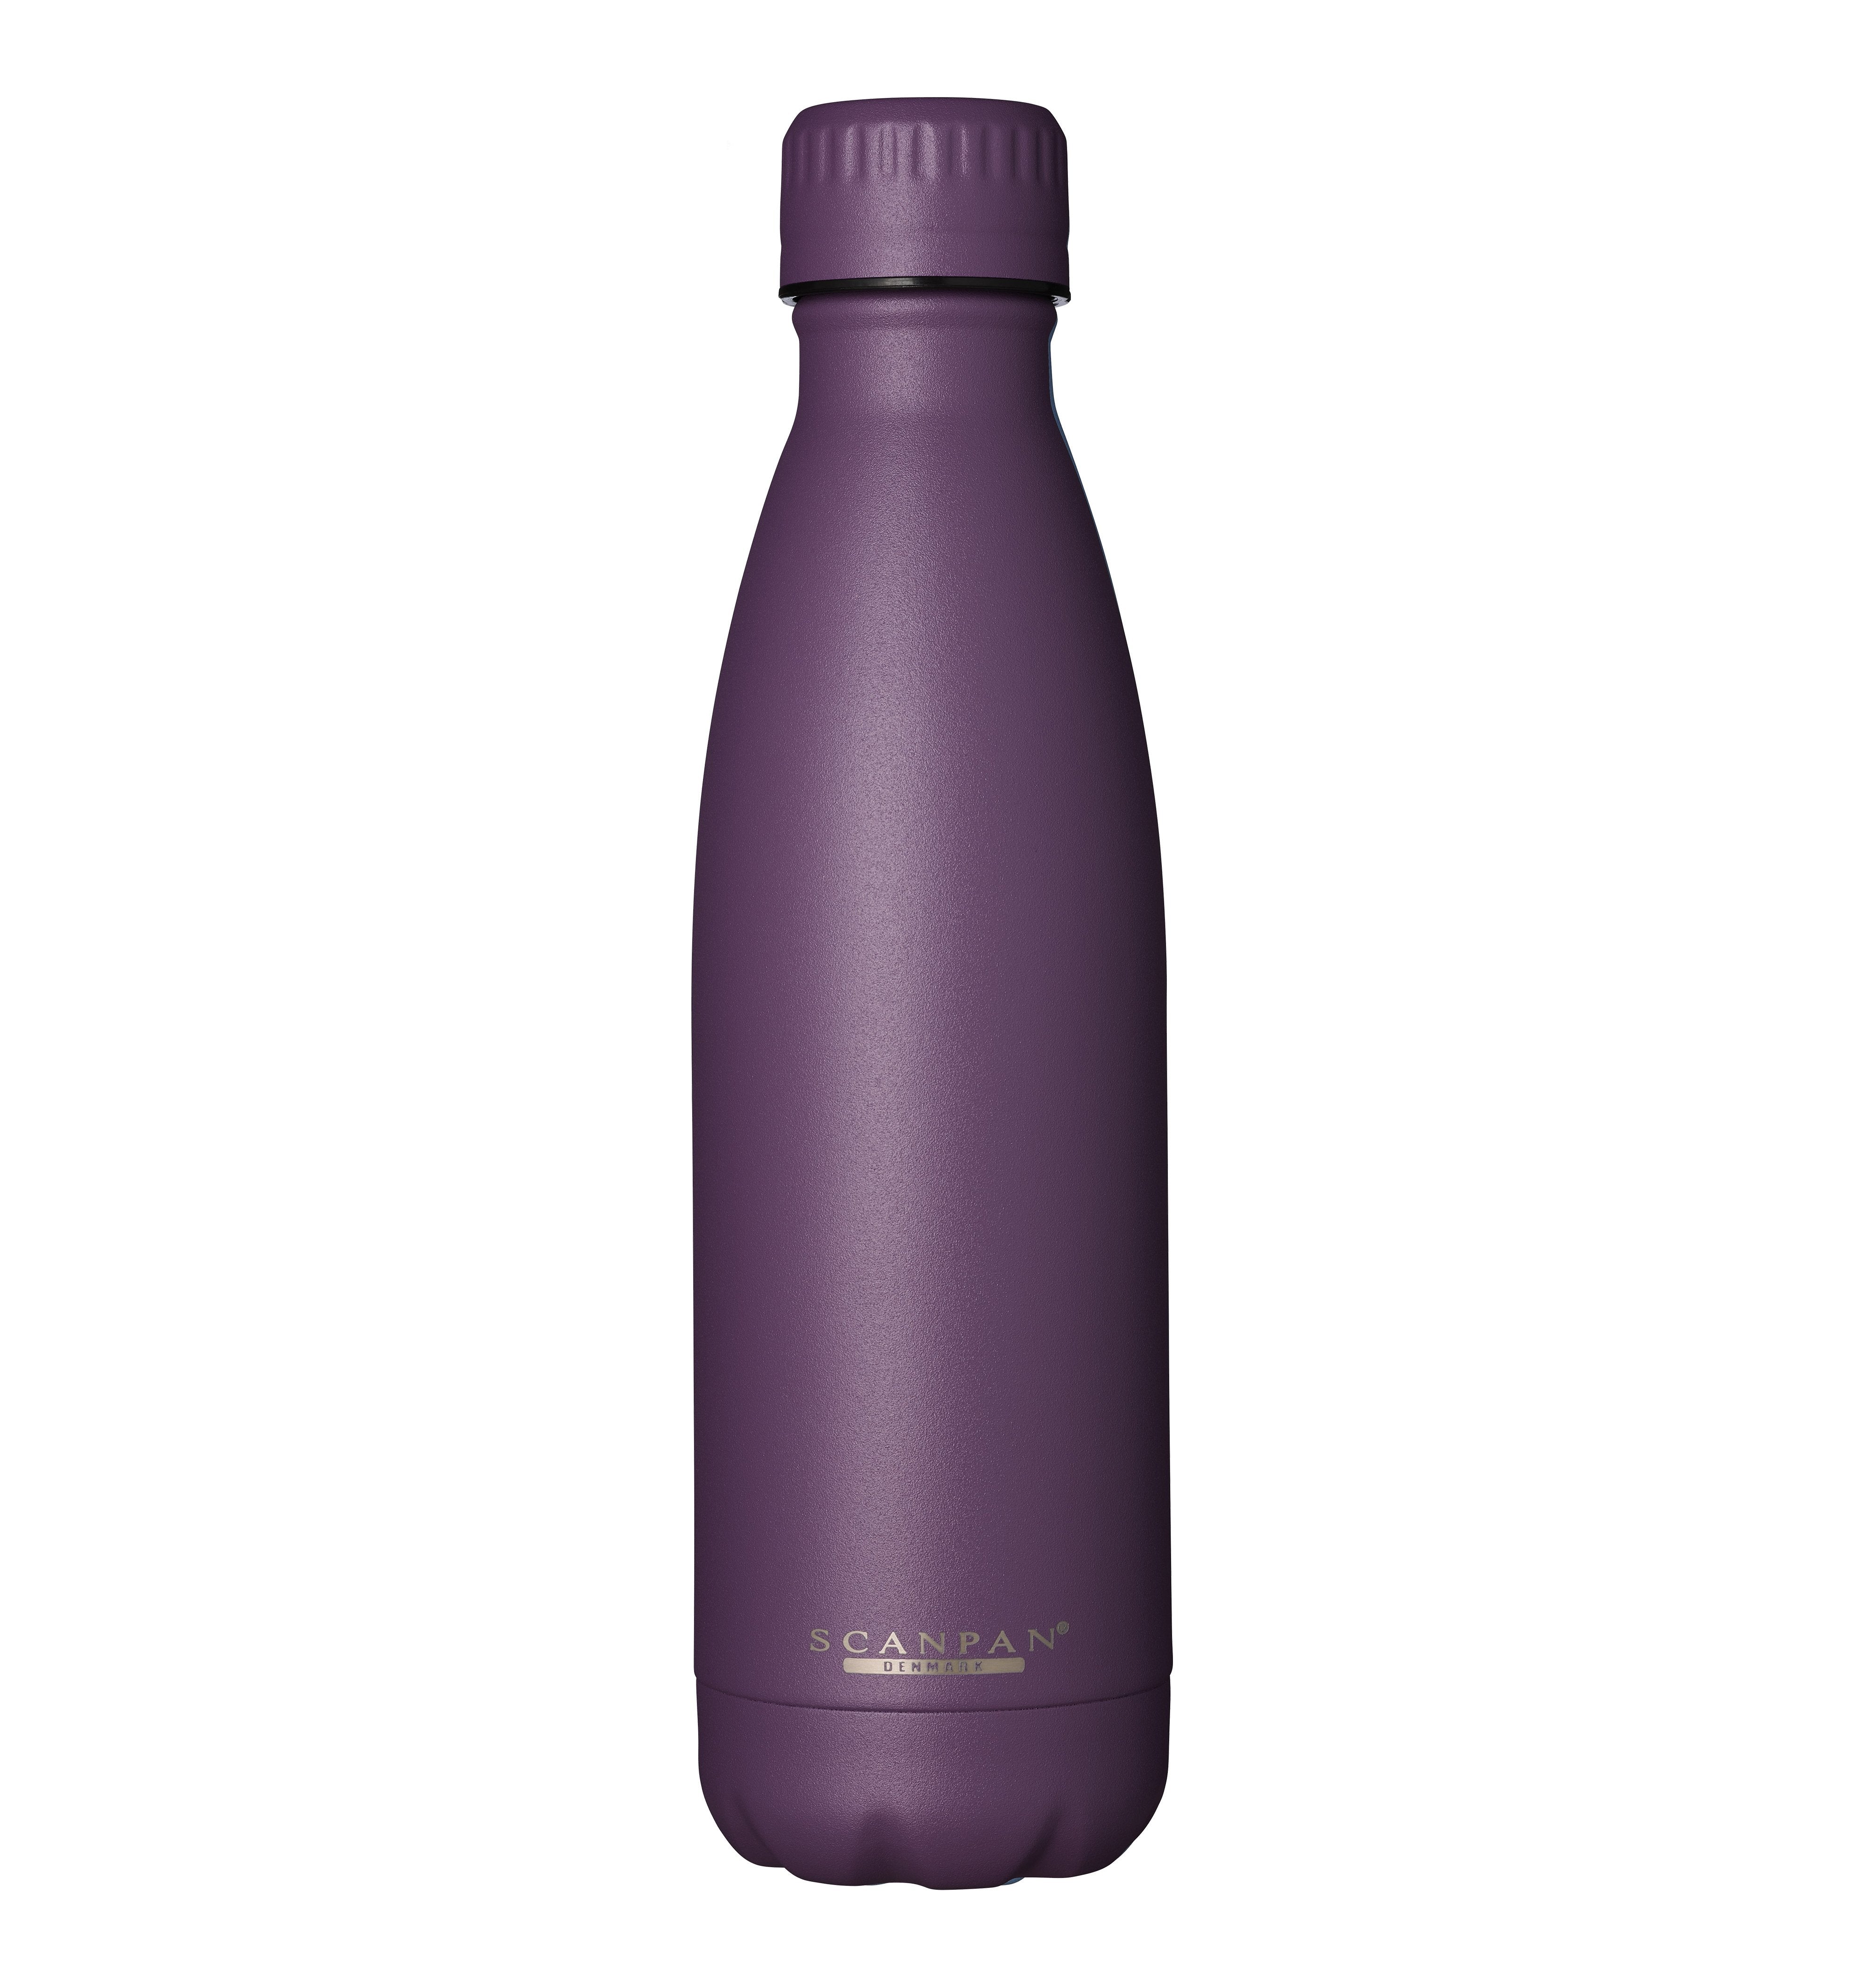 SCANPAN To Go 500ml Bottle - Purple Gumdrop